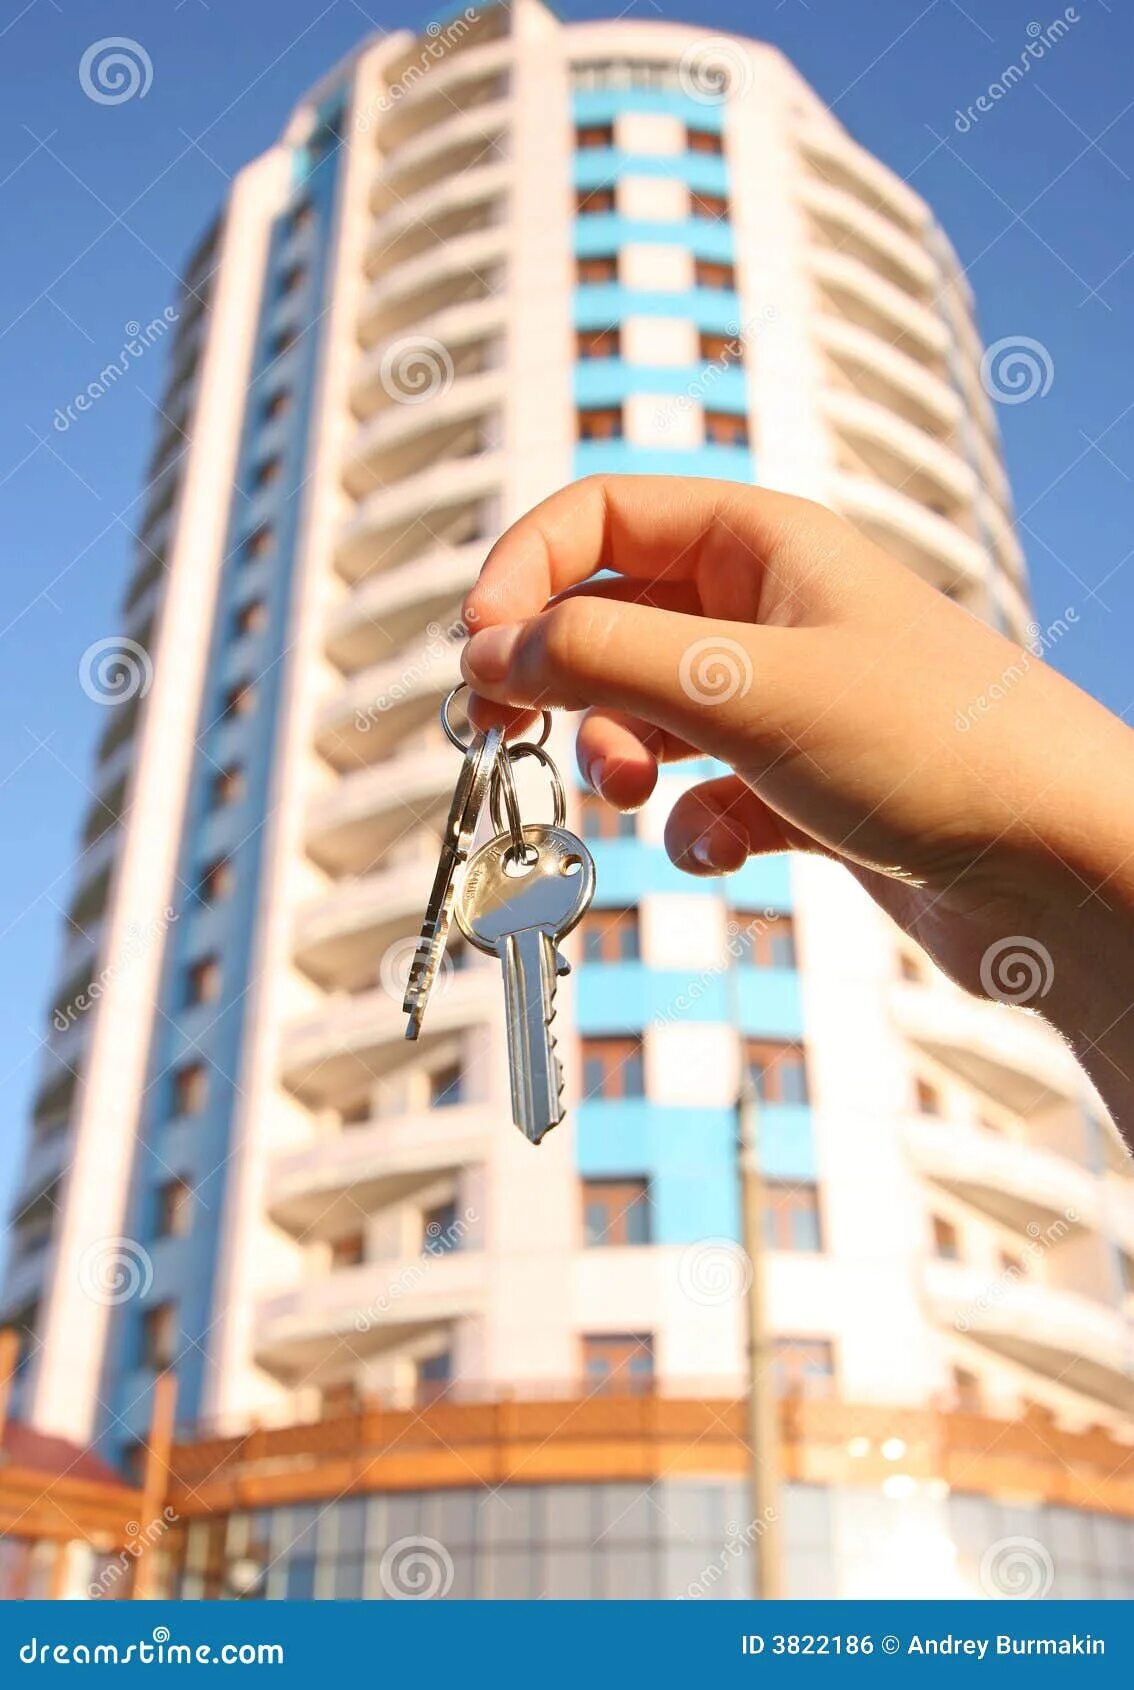 Домик с ключами. «Ключи к дому». Ключи от новостройки. Дом многоэтажный и ключи в руках.